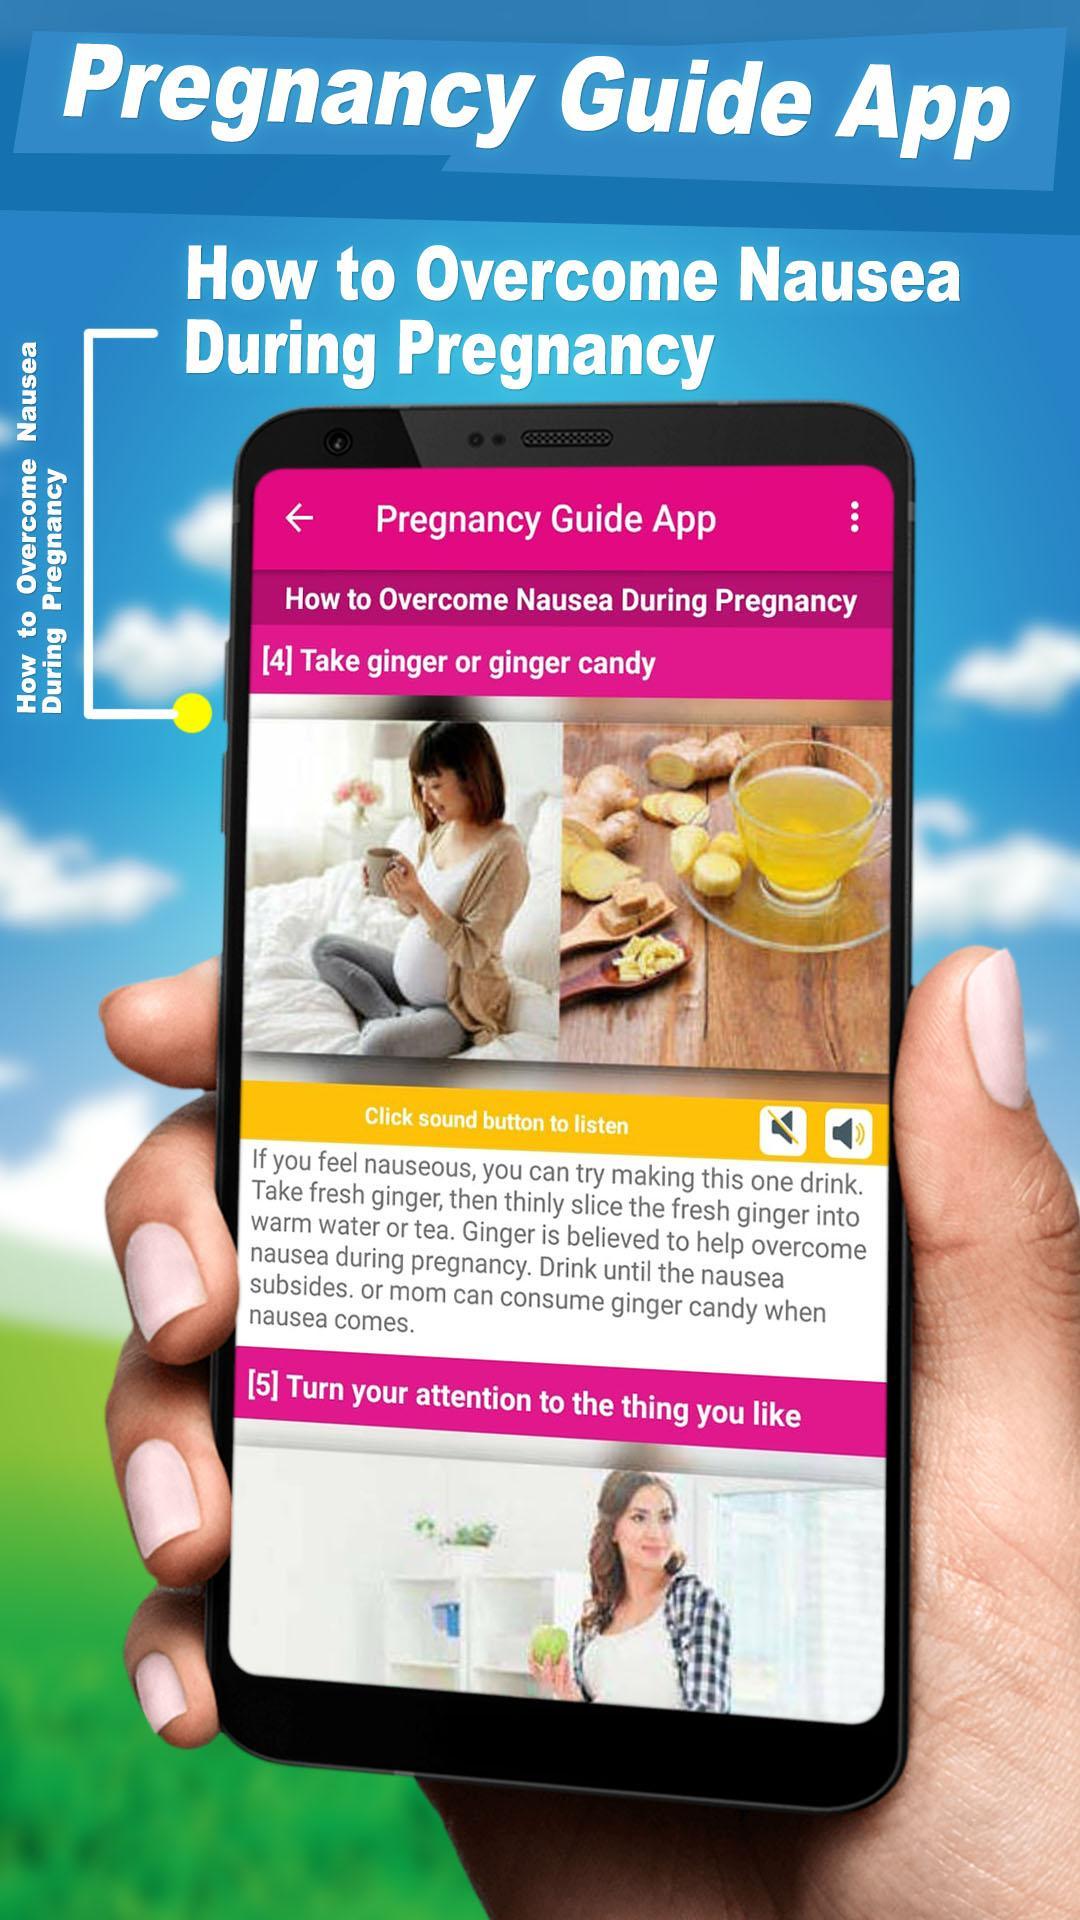 Pregnancy Guide App Pregnancy Guide App 4.0 Screenshot 18